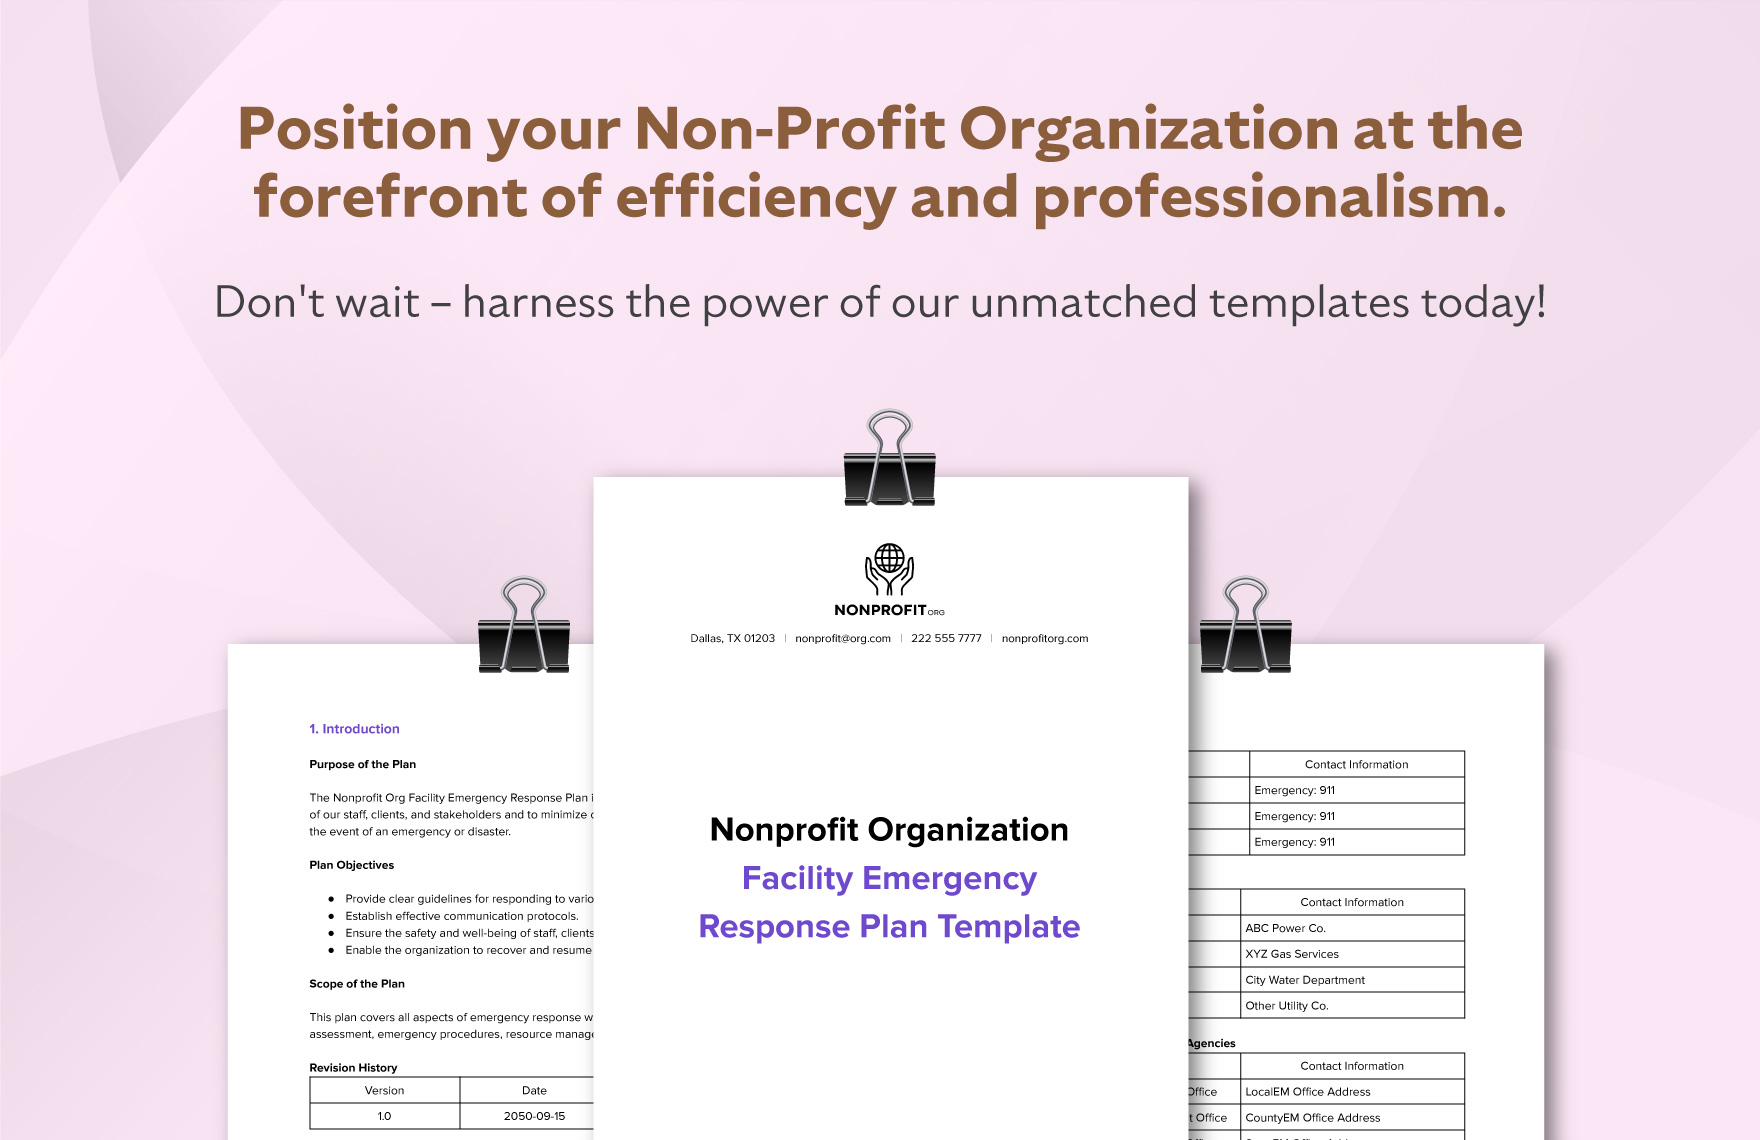 Nonprofit Organization Facility Emergency Response Plan Template